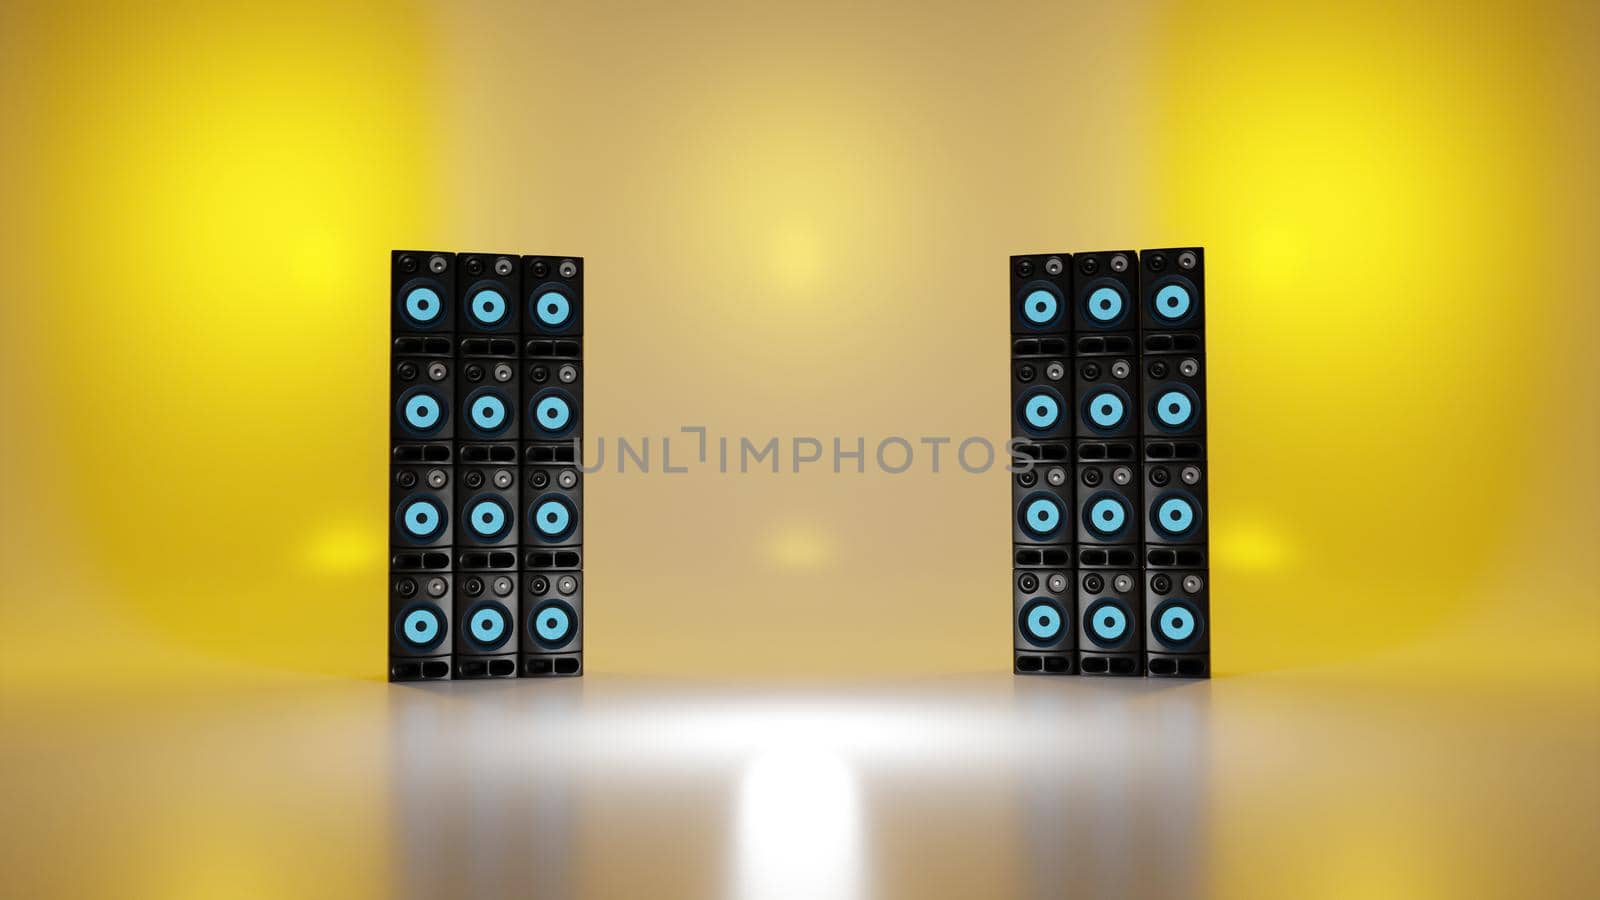 Tower of loudspeakers on stage. Music concert, recording studio concept. Digital 3D render. by hernan_hyper